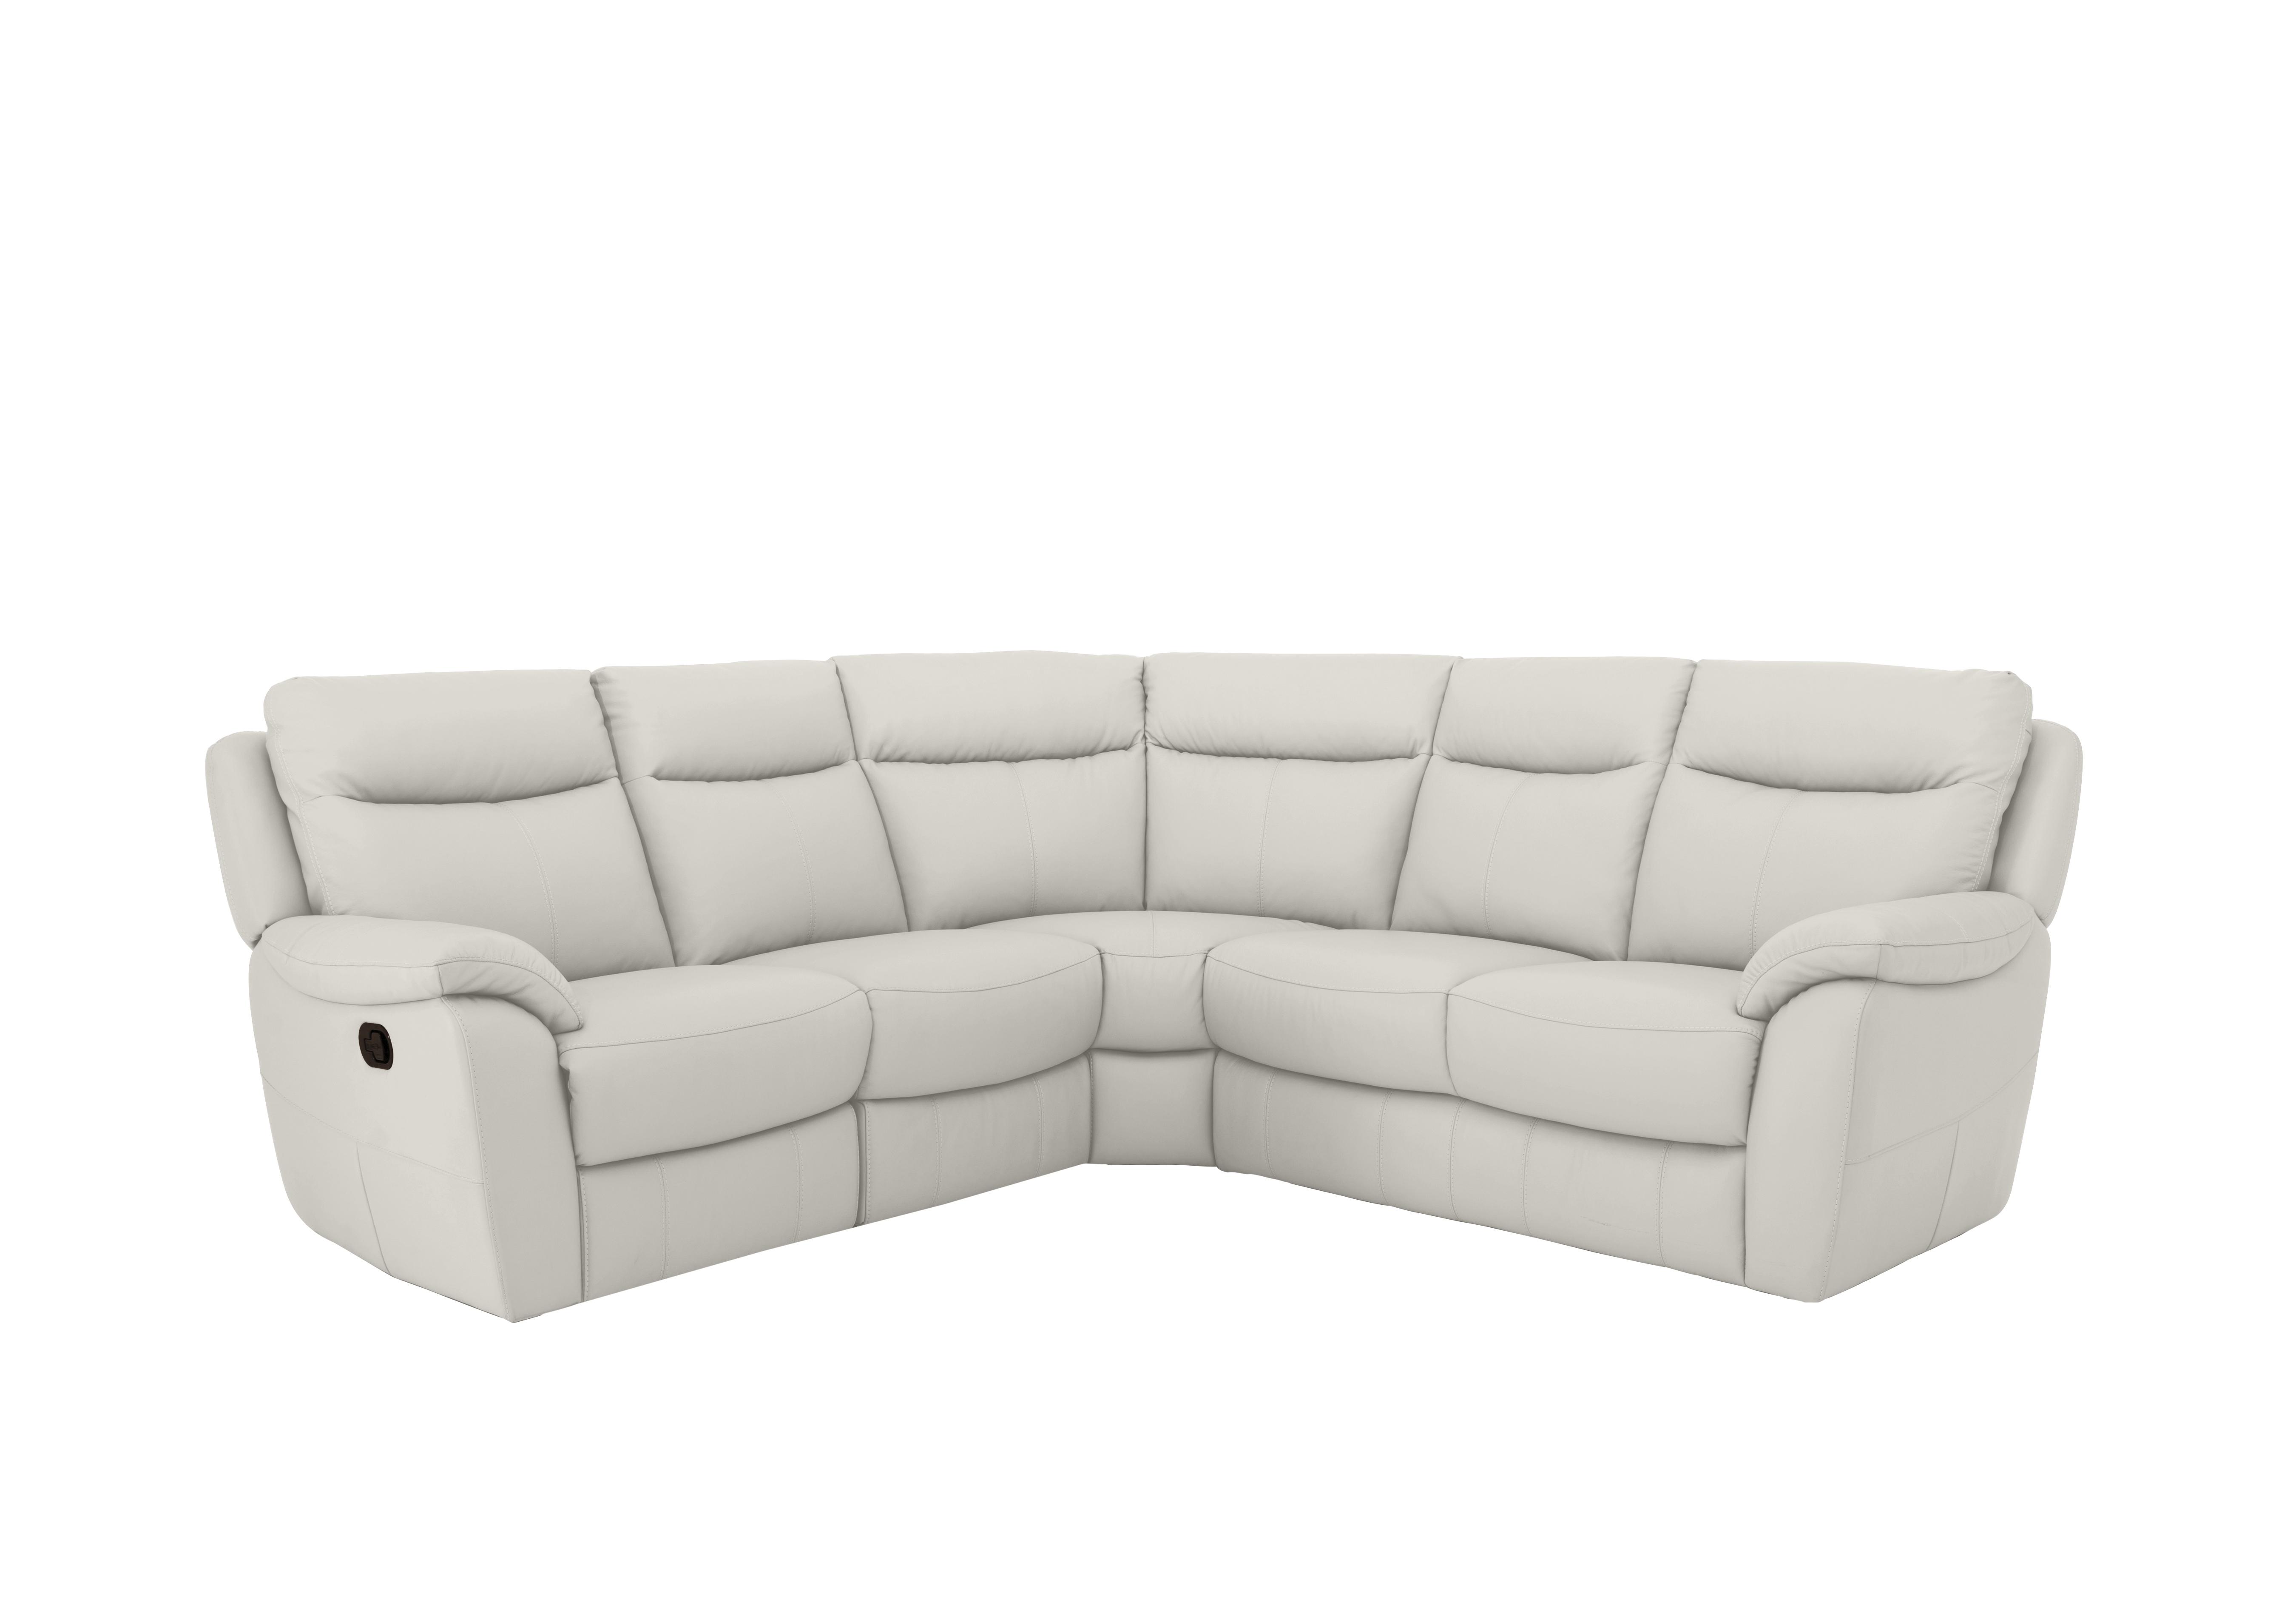 Snug Leather Corner Sofa in Bv-156e Frost on Furniture Village